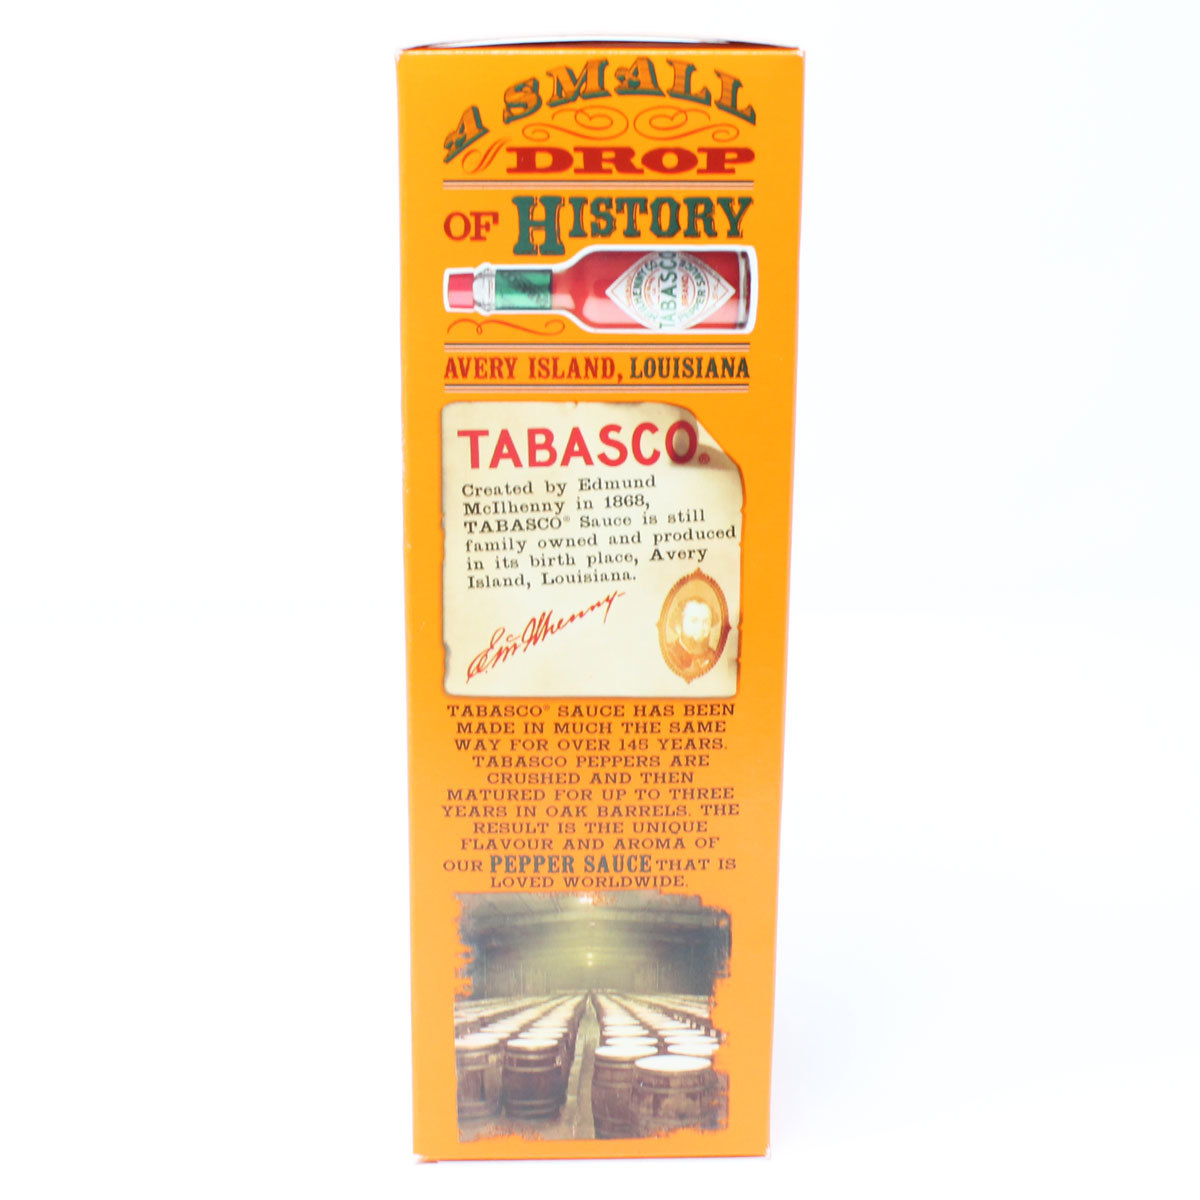 Mcilhenny tabasco sauce history